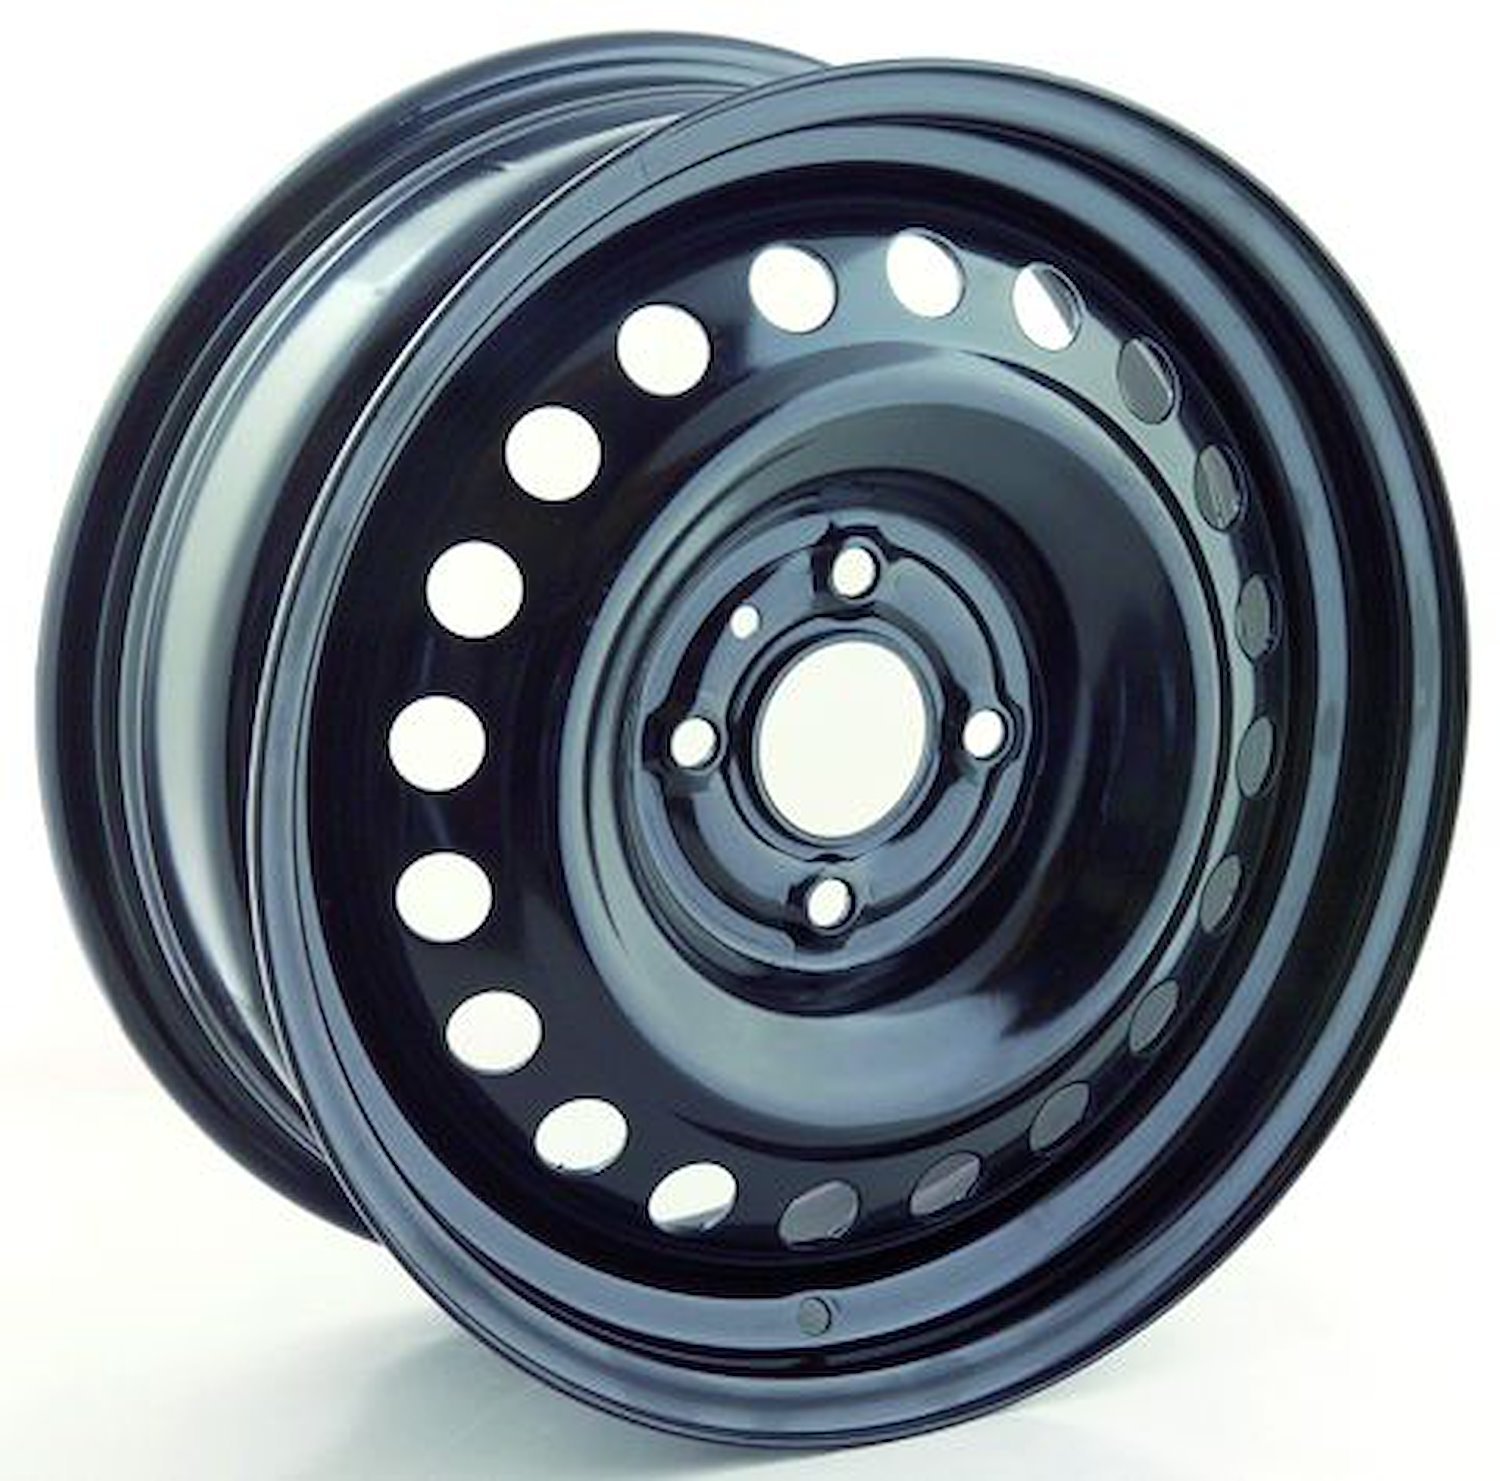 X46646 Steel Wheel [Size: 16" x 6.50"] Black Finish